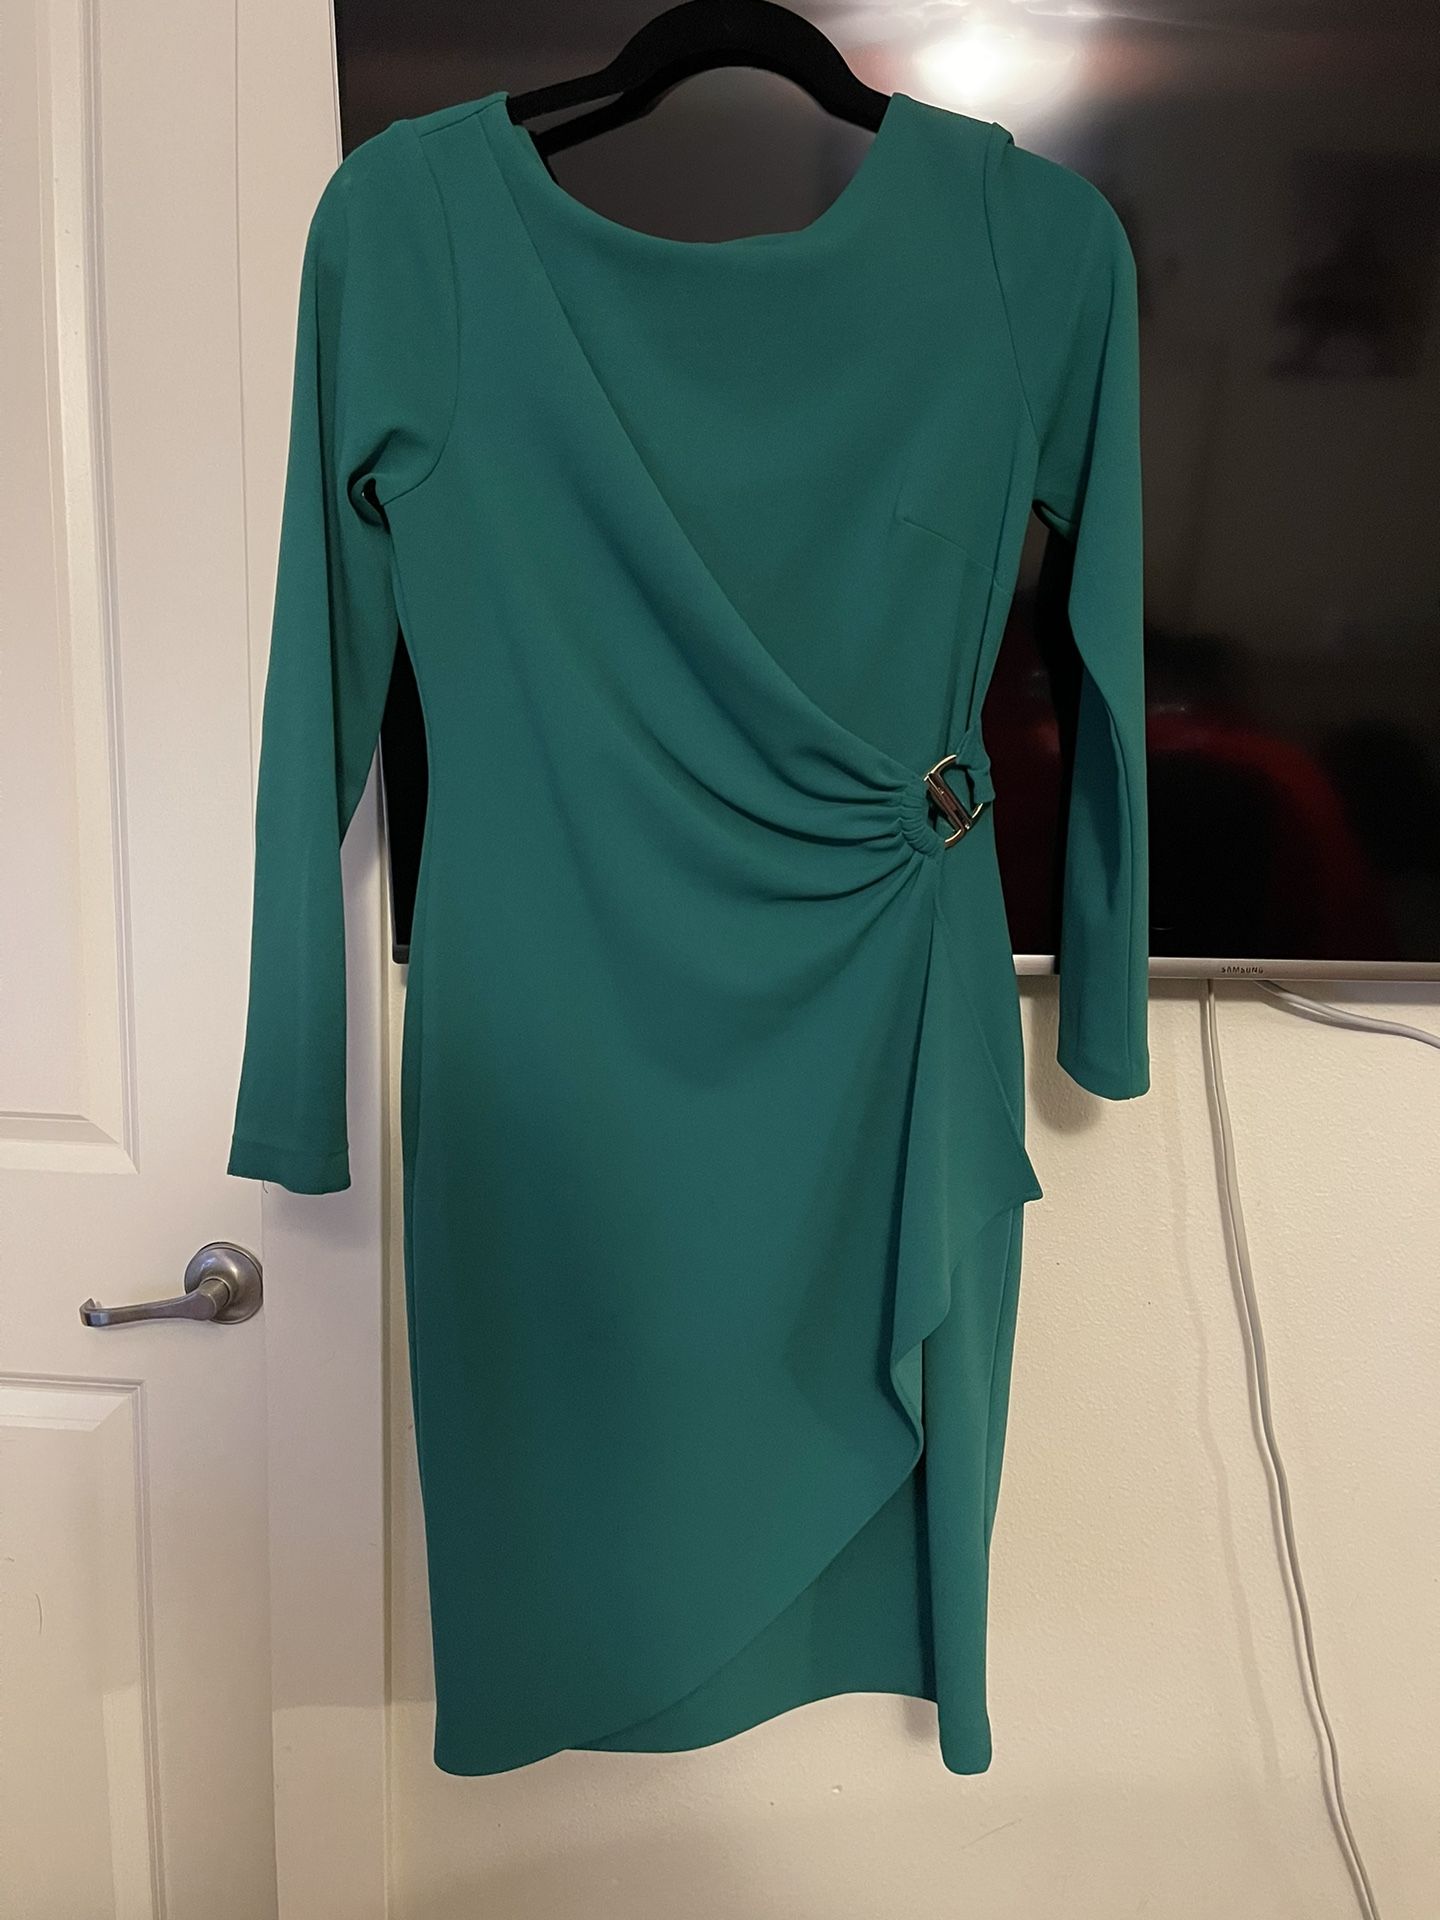 Green Medium Length Dress Size 4